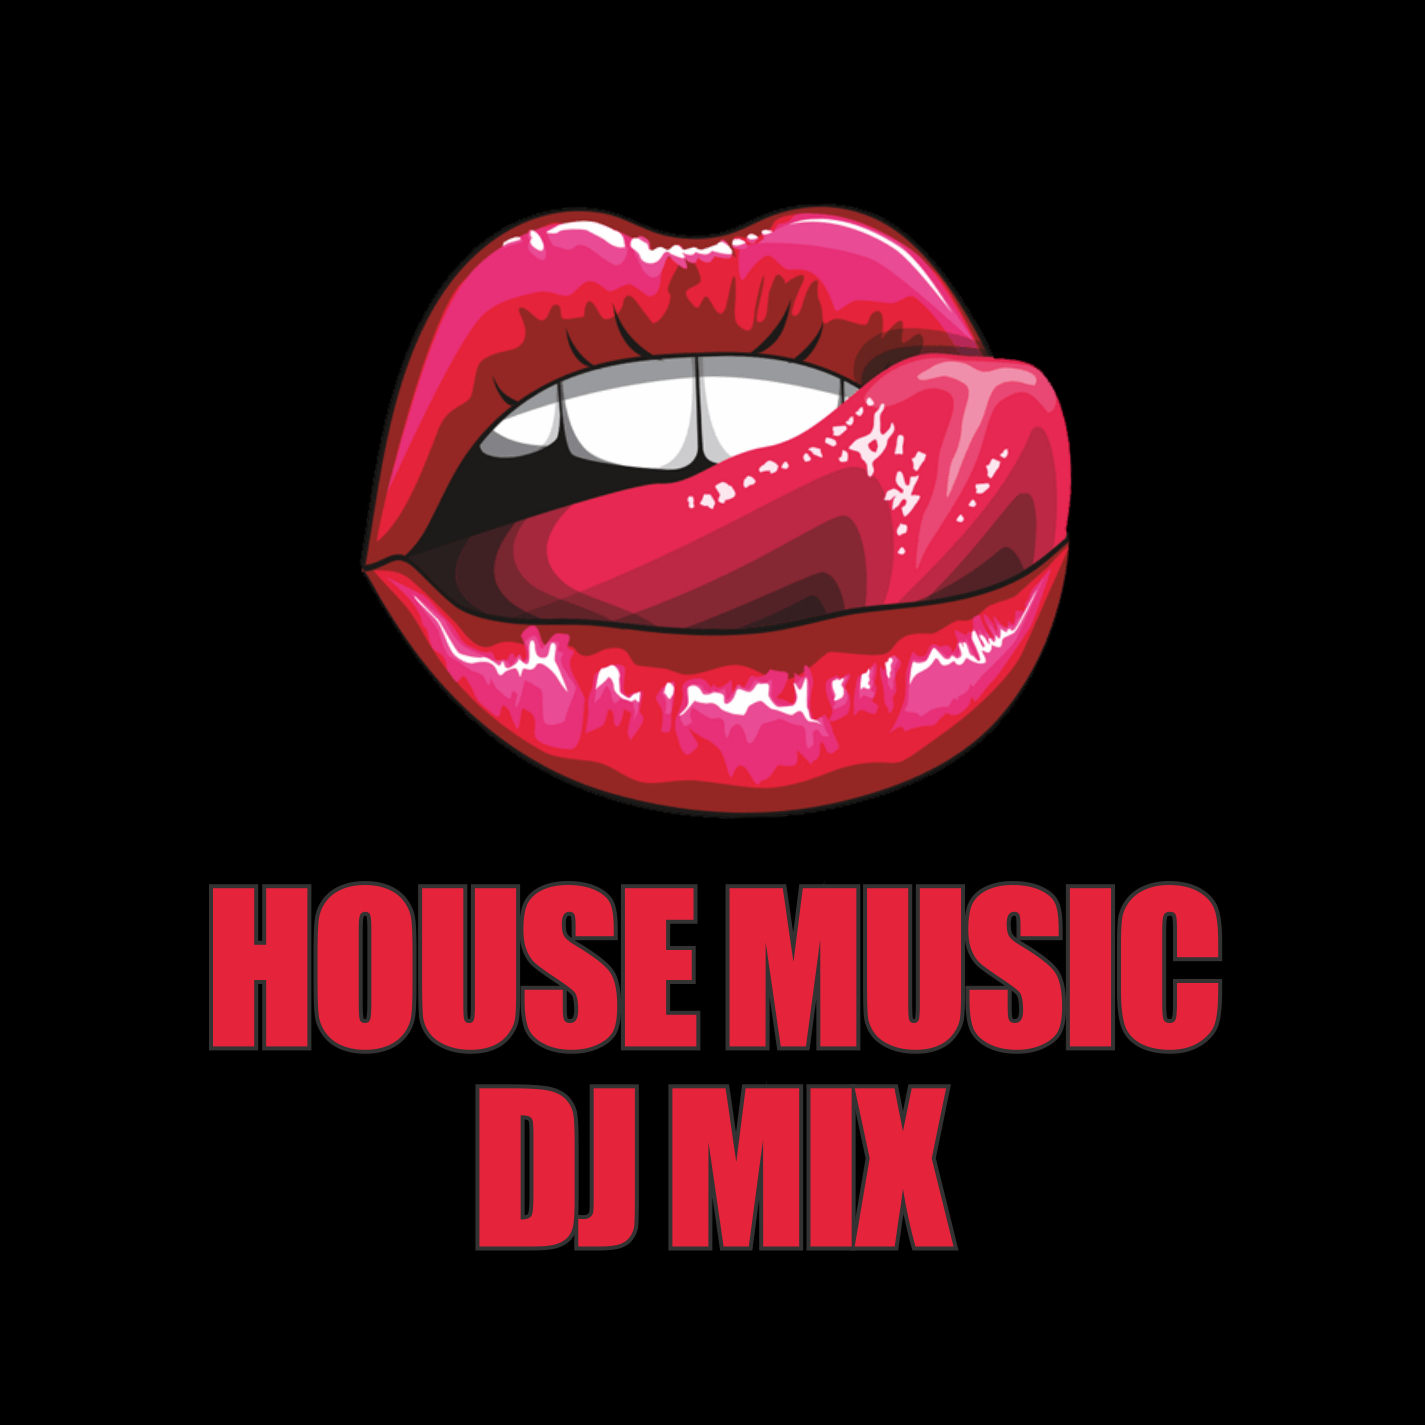 https://ia800803.us.archive.org/24/items/house-music-dj-mix-logo/housemusicdjmix-logo-text.jpg